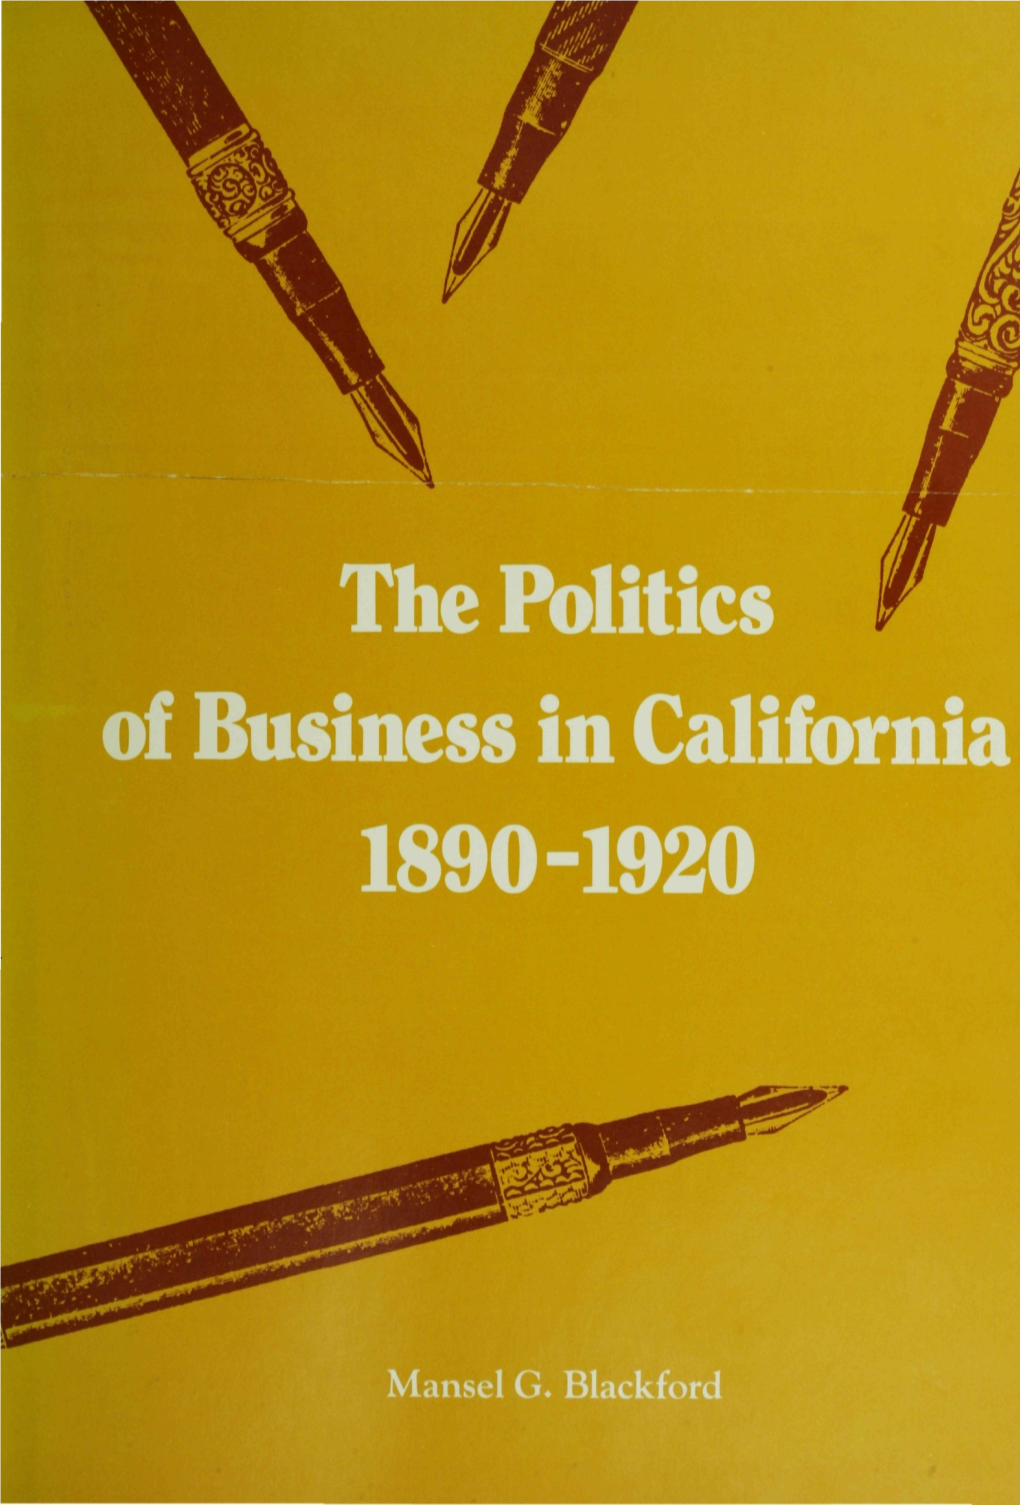 He Politics of Business in California 1890-1920 SI 2.50